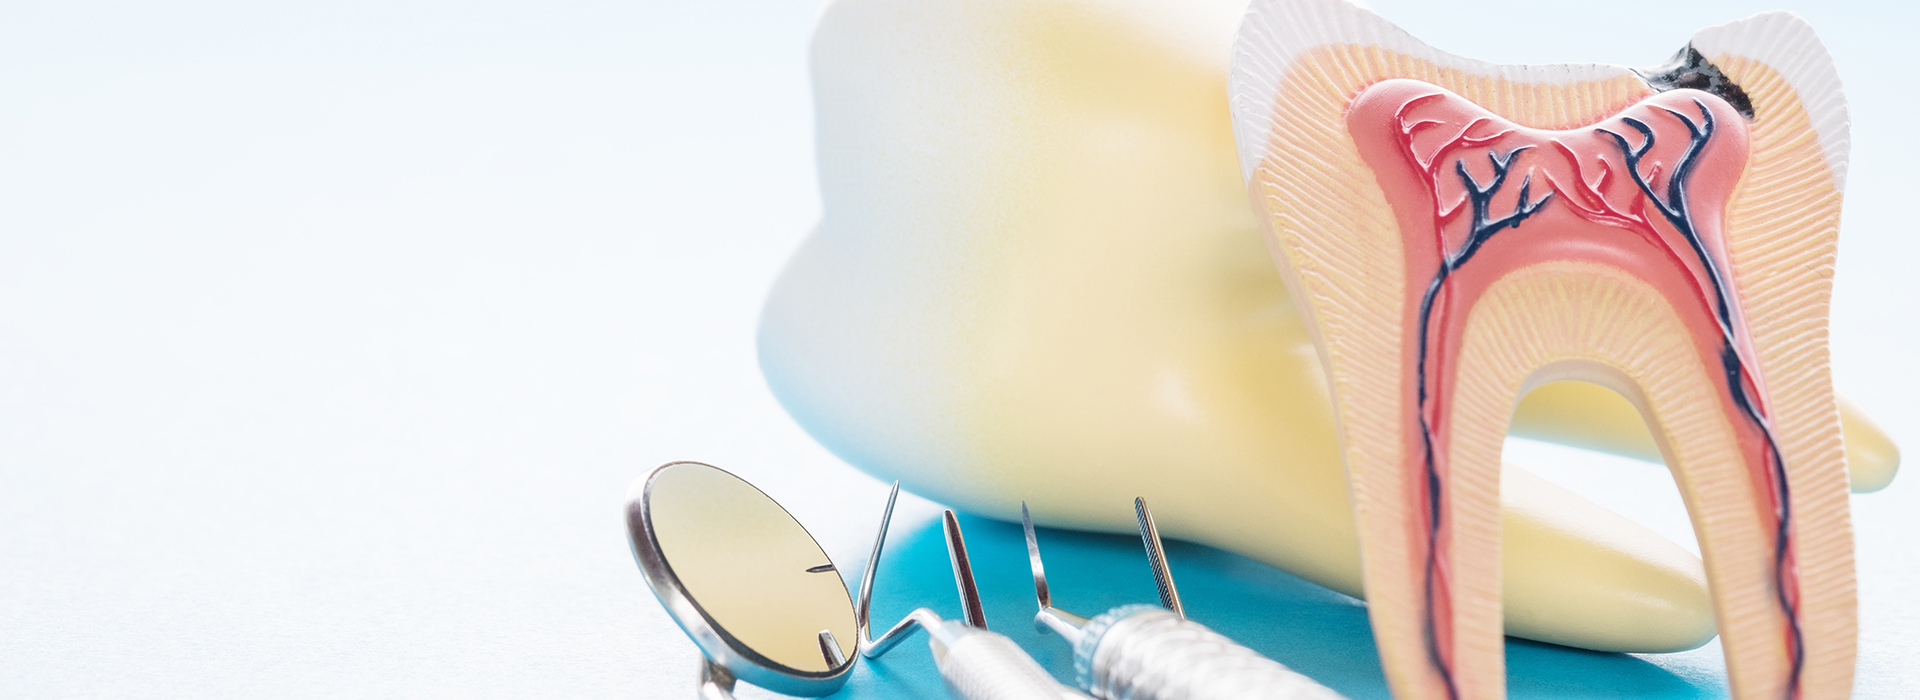 Eastern Pines Dental | Same Day Crowns, Sleep Apnea and Oral Surgery